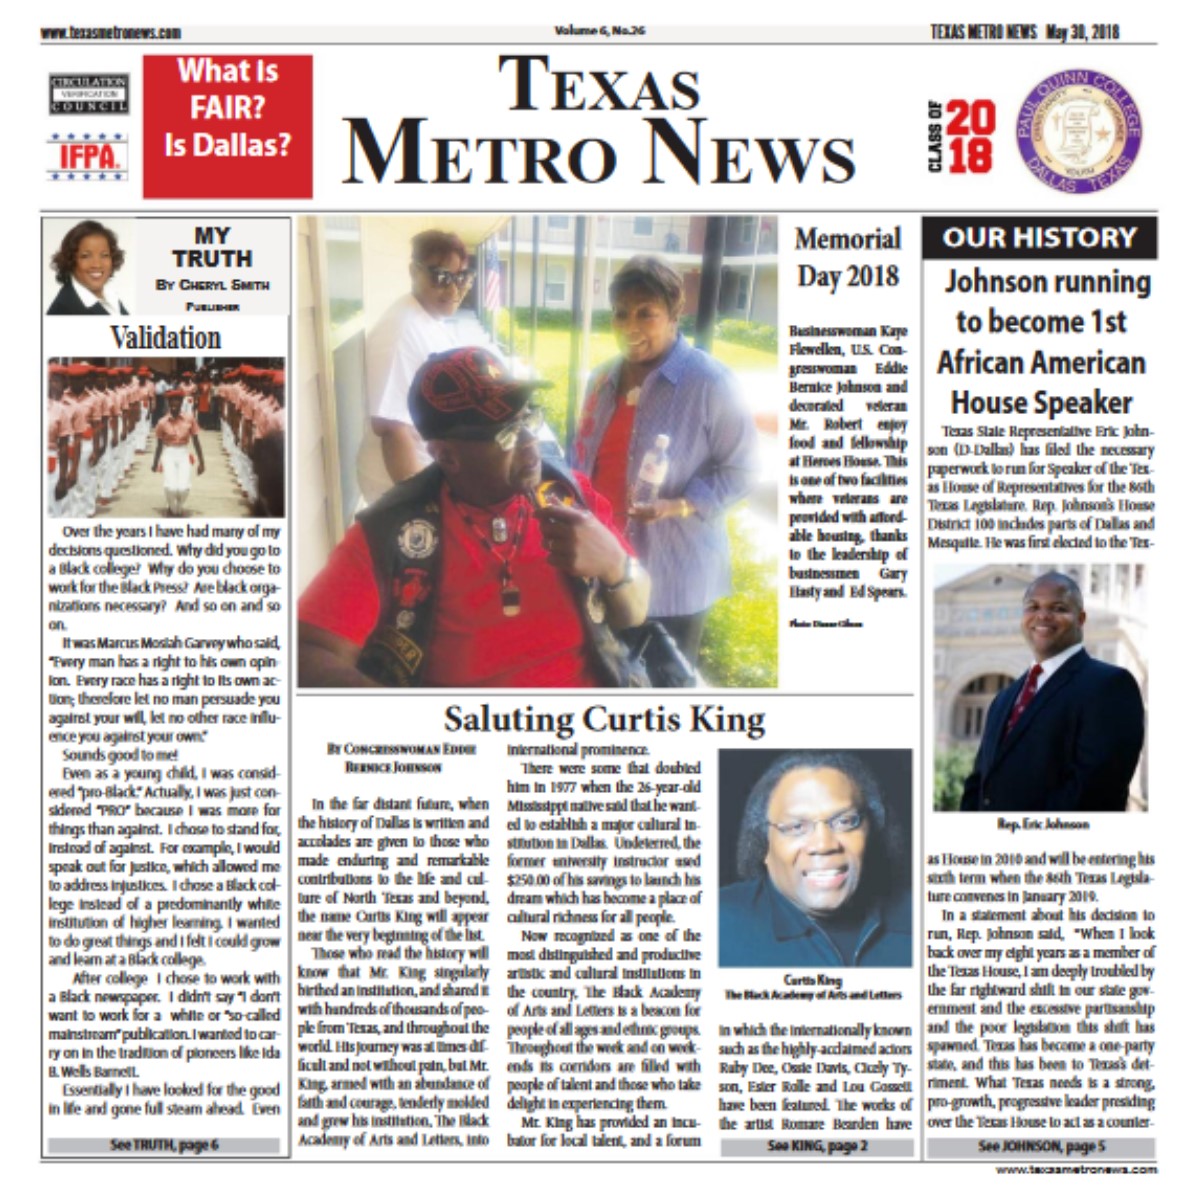 Texas Metro News: 5/30/18